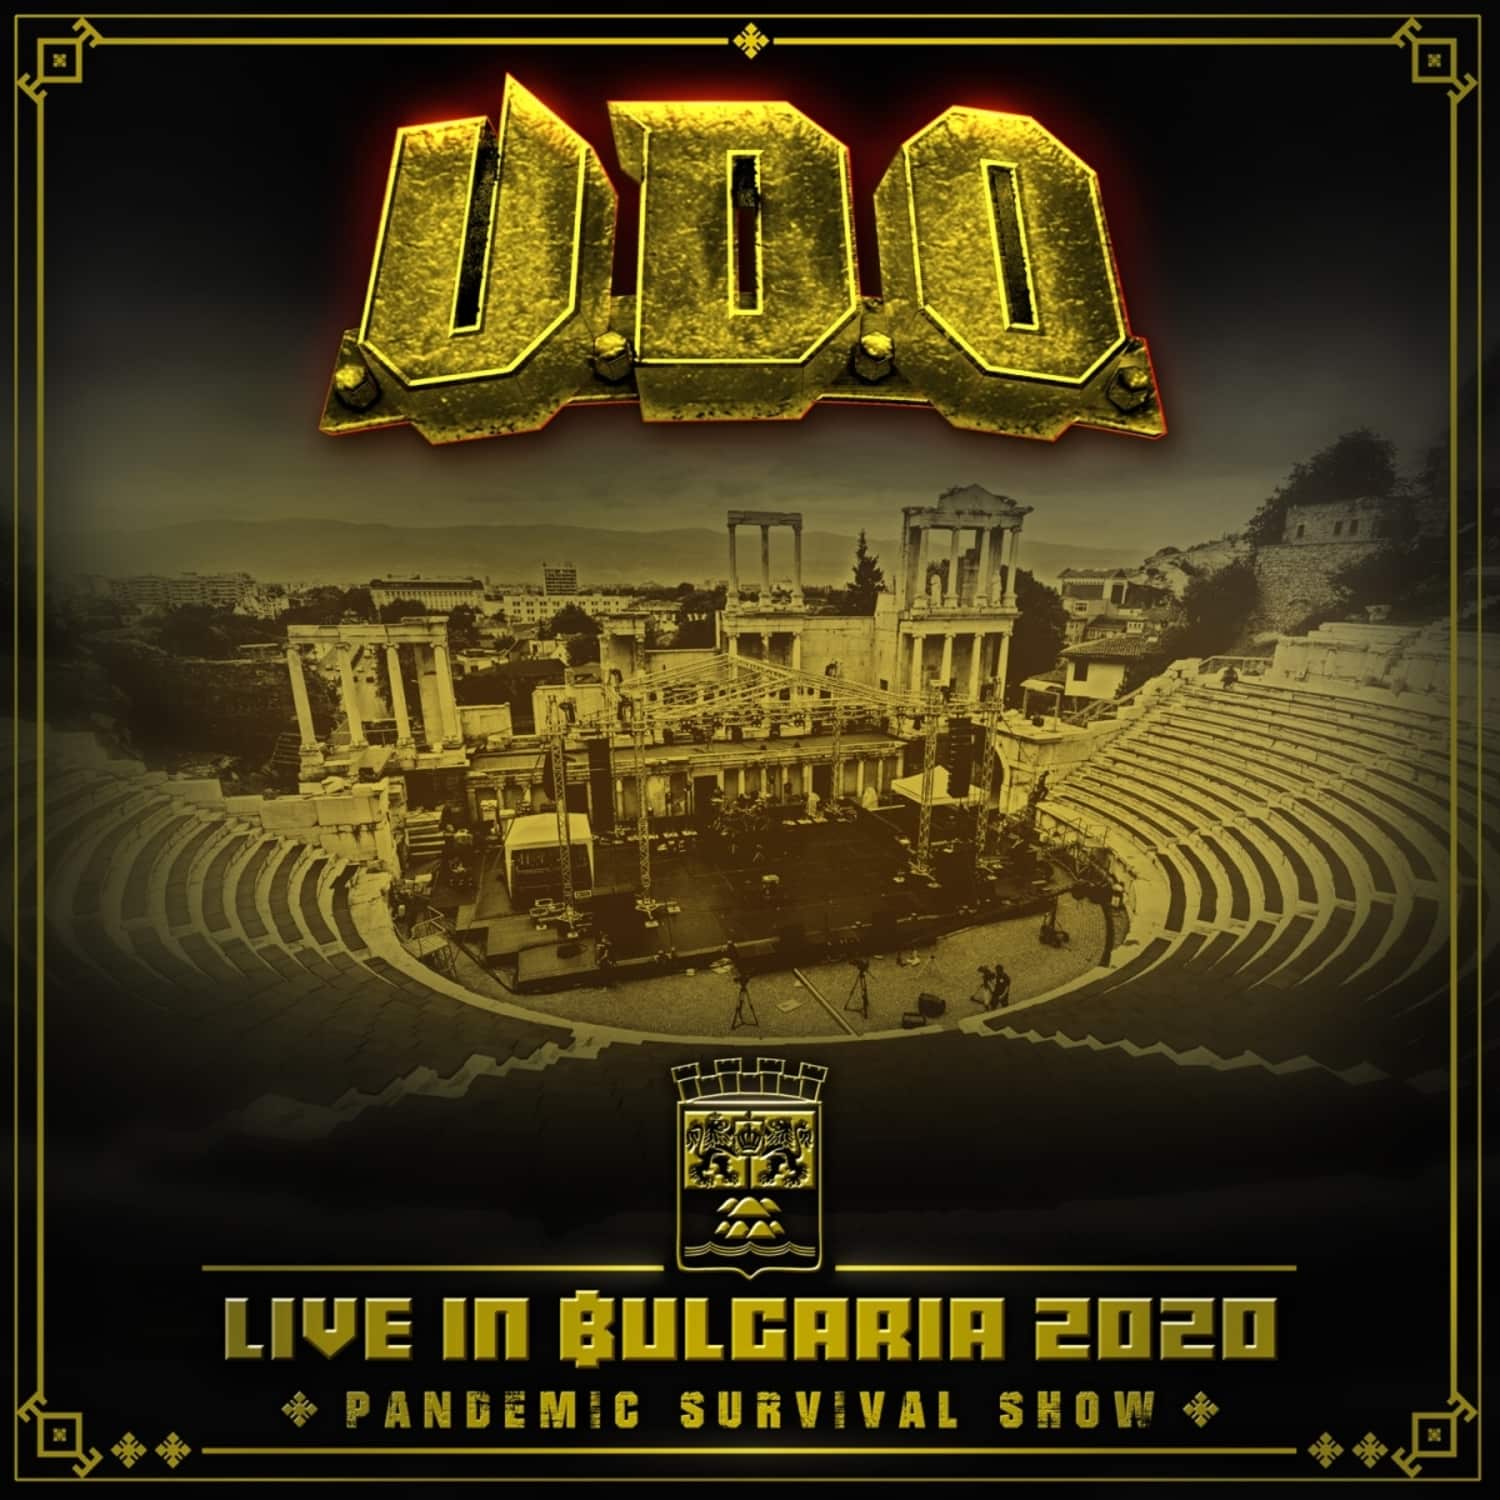 U.D.O. - LIVE IN BULGARIA 2020-PANDEMIC SURVIVAL SHOW 